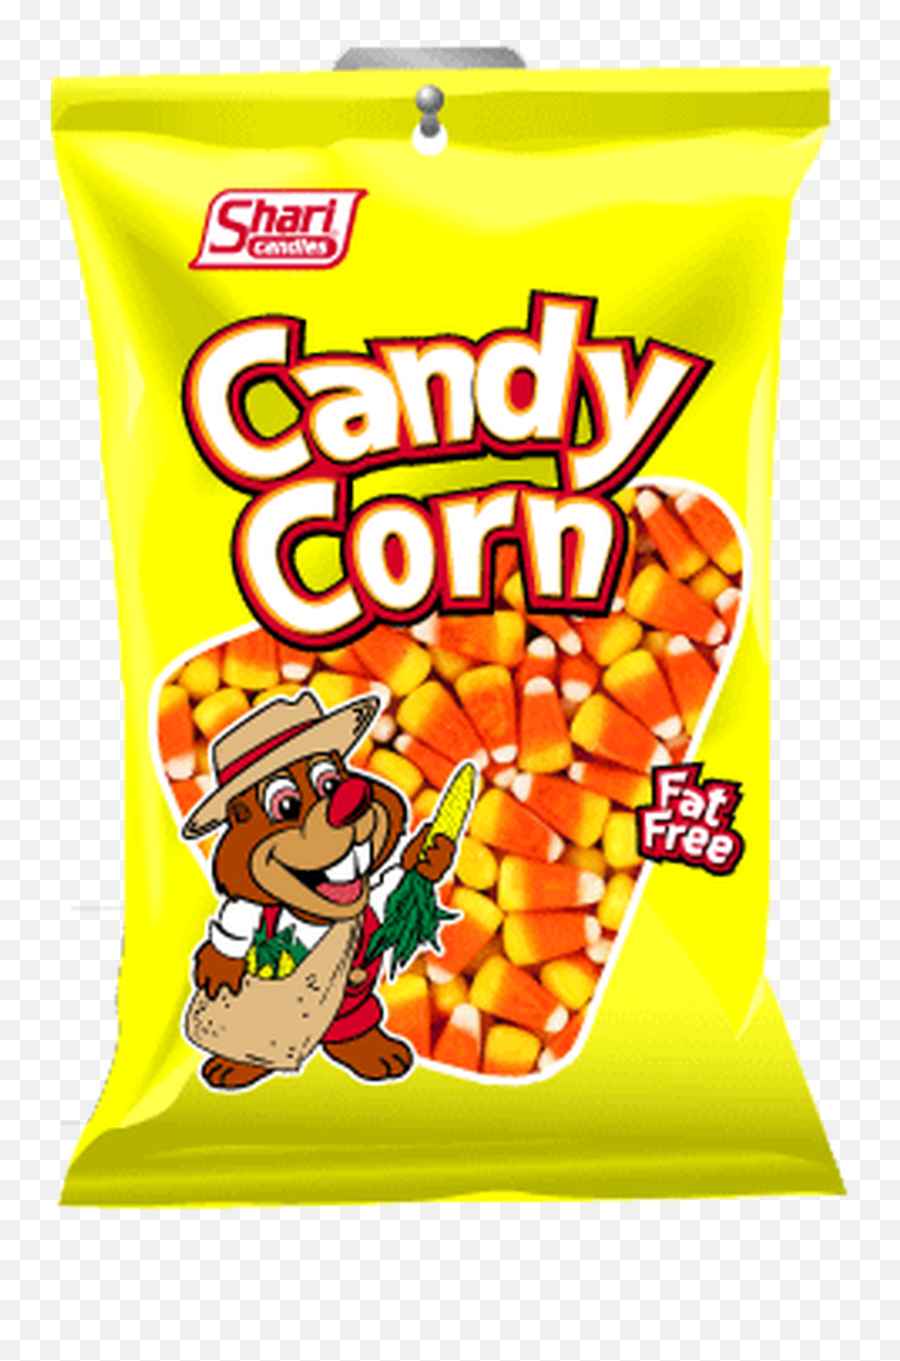 Candy Corn - Shari Candy Corn Oz Png,Candy Corn Transparent